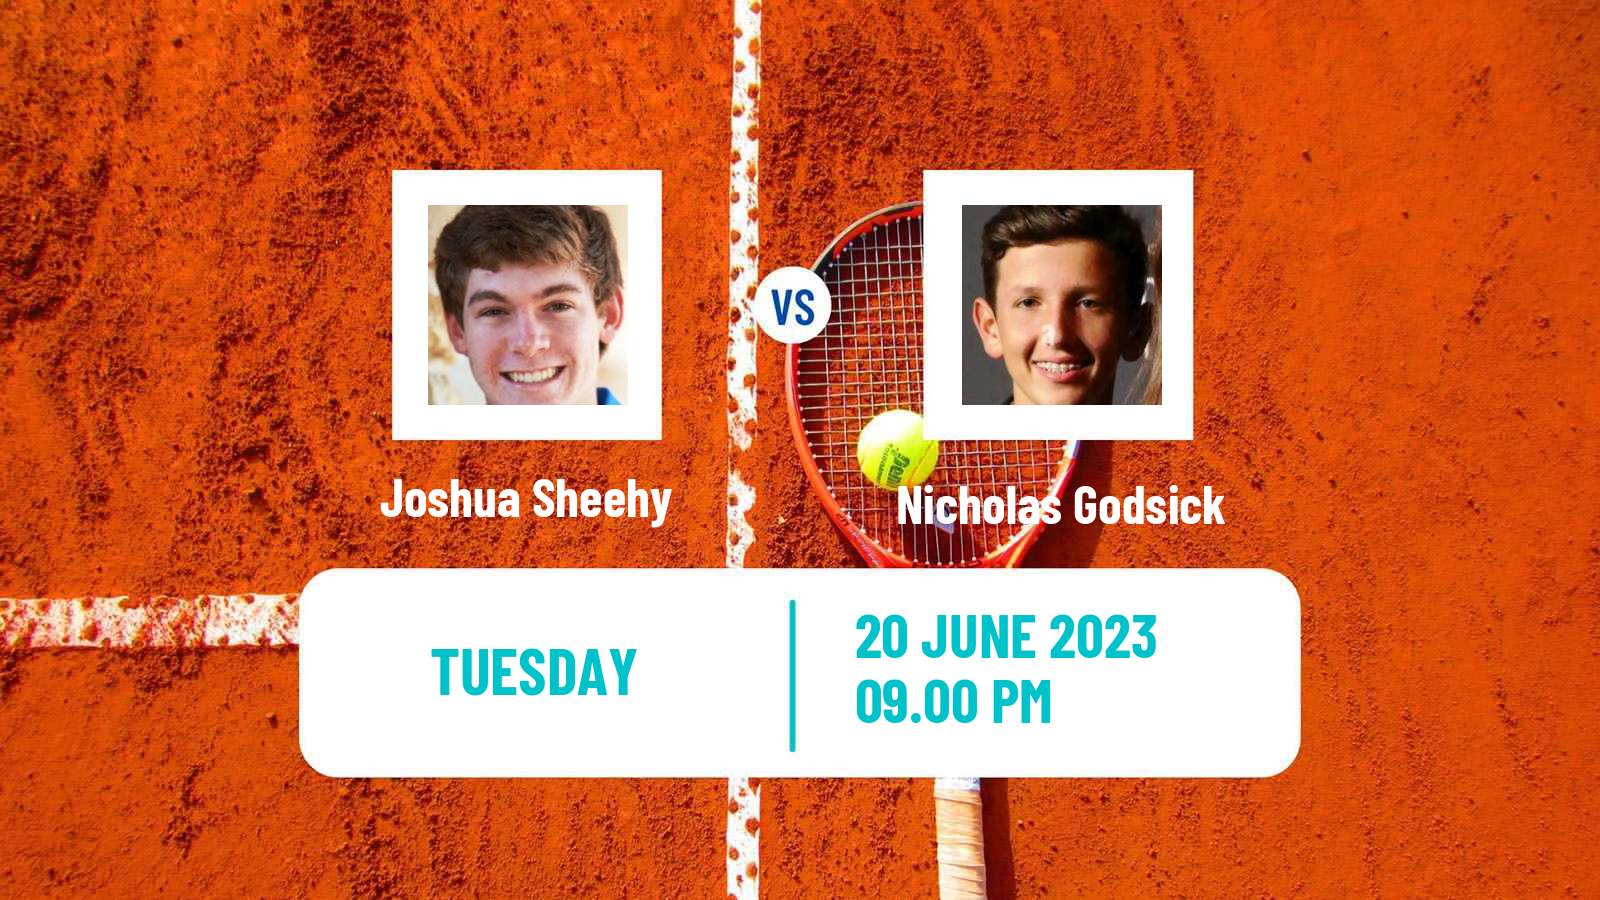 Tennis ITF M15 Los Angeles Ca Men Joshua Sheehy - Nicholas Godsick